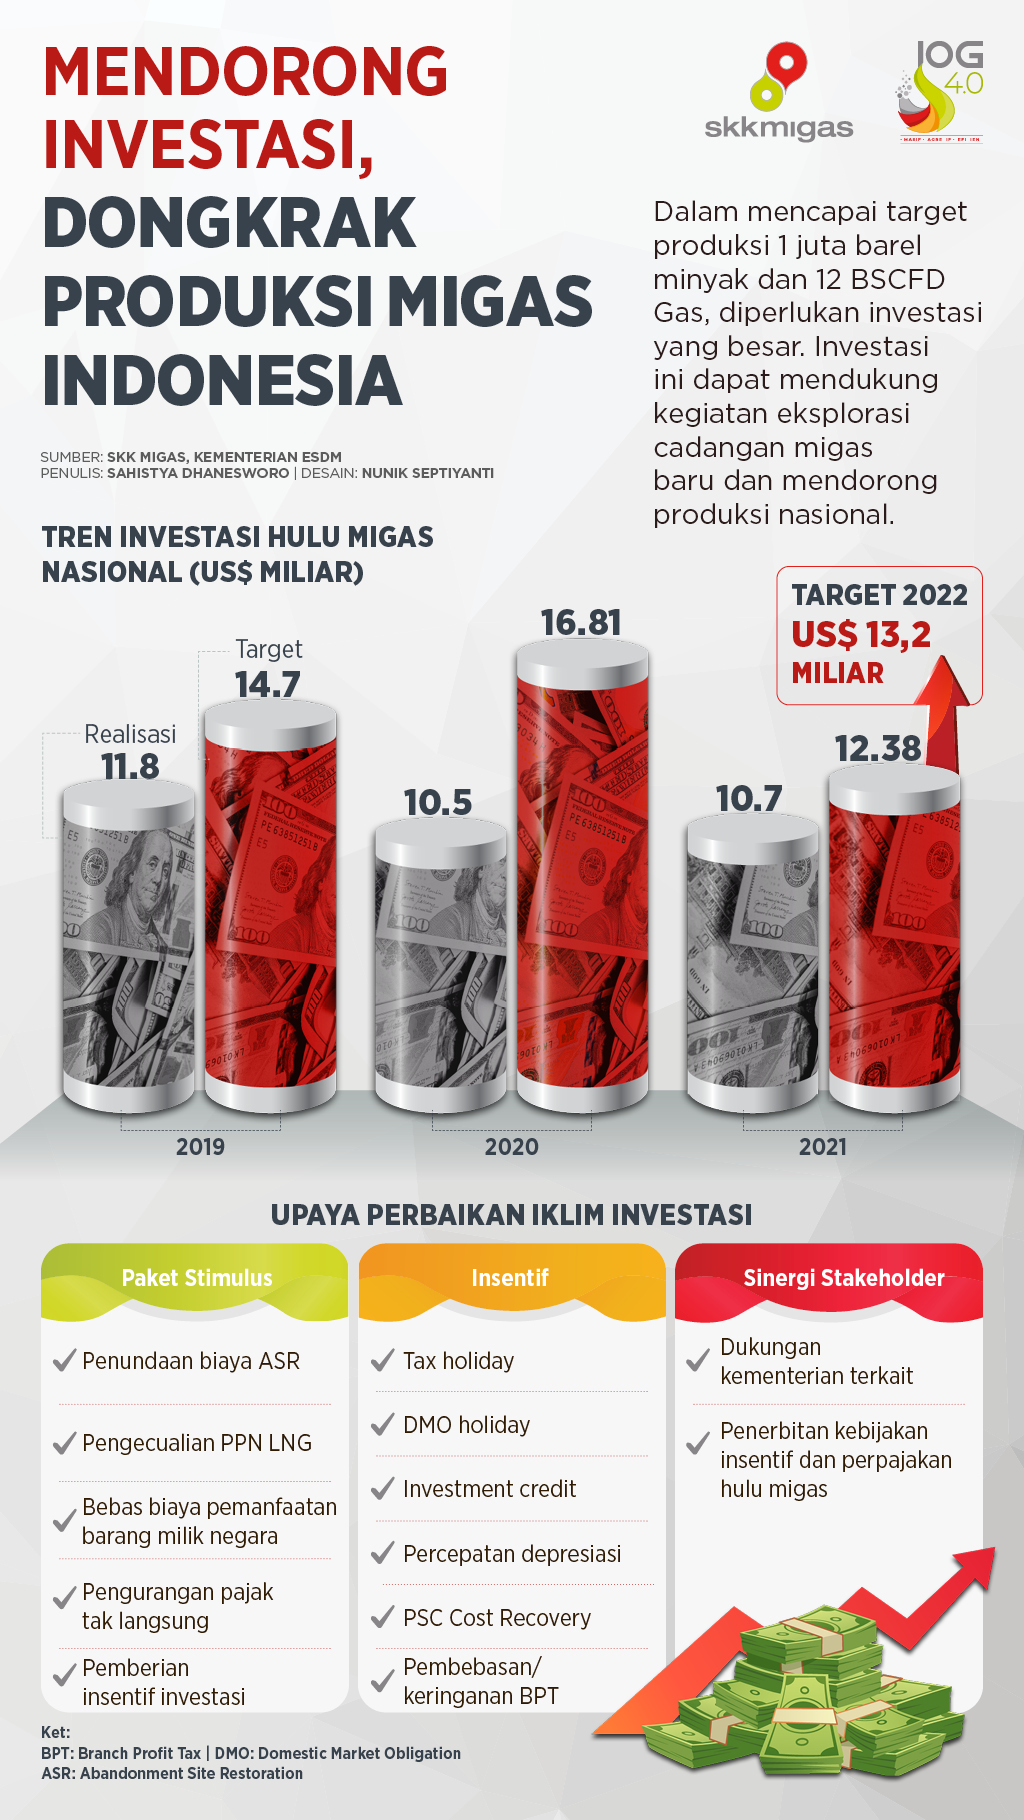 Mendorong Investasi, Dongkrak Produksi Migas Indonesia